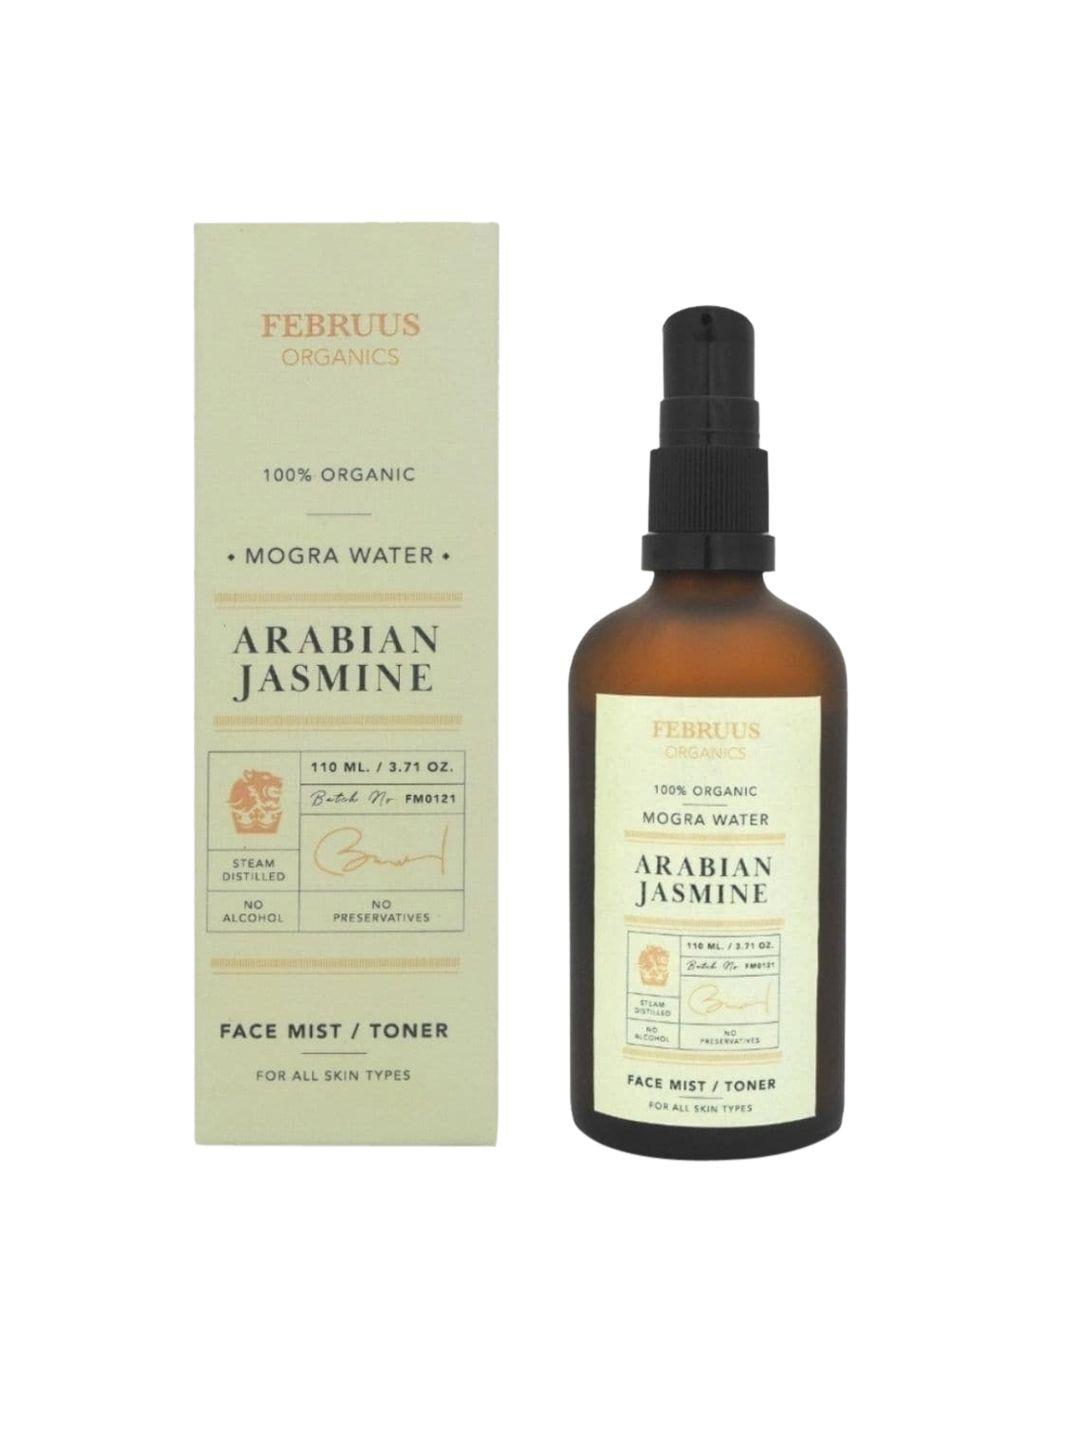 februus organics face mist - arabian jasmine - 110 ml